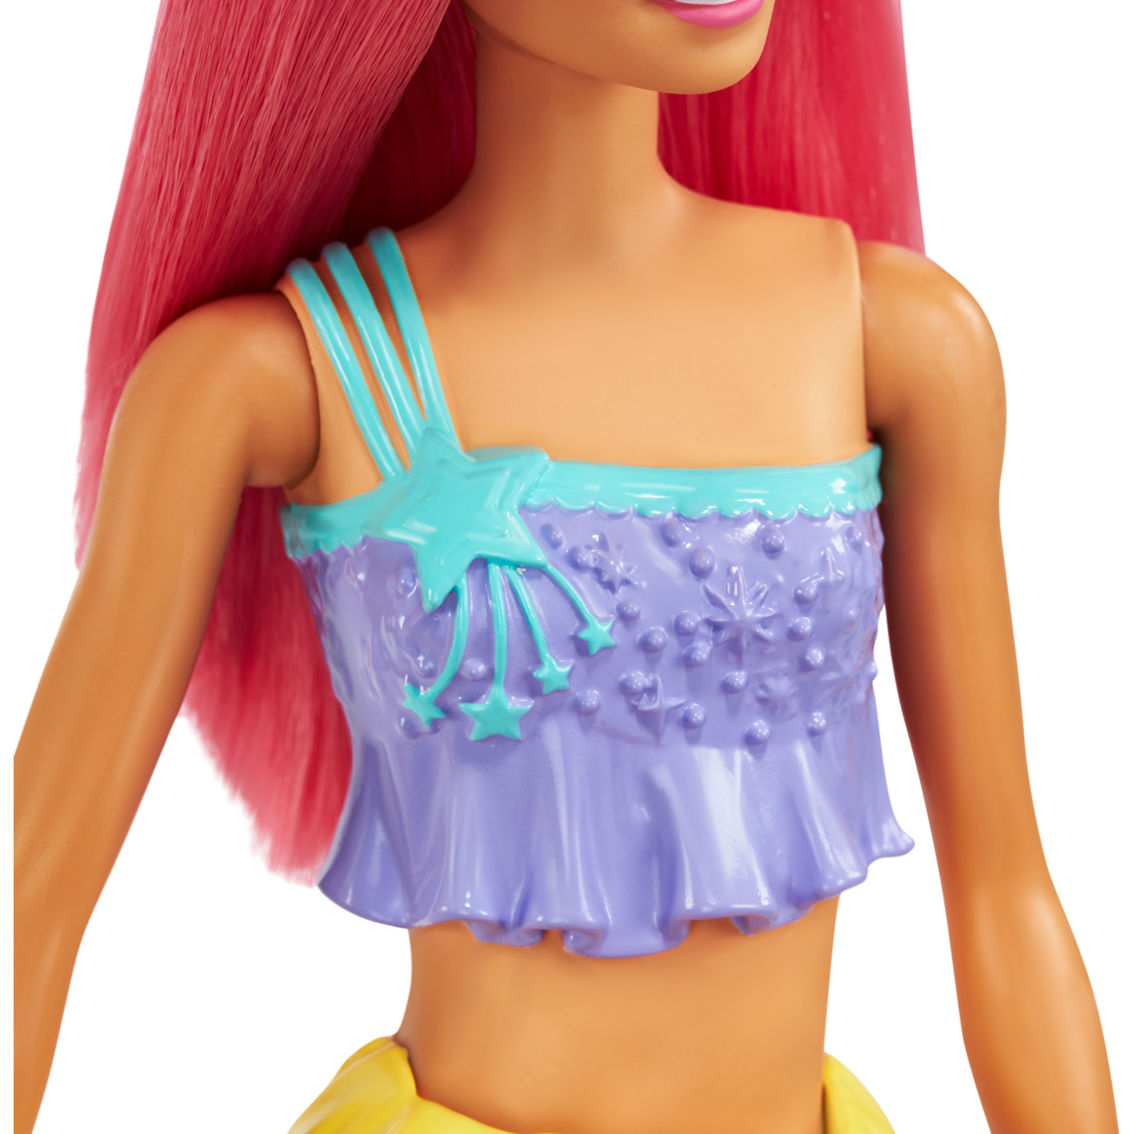 ​Mattel Barbie Dreamtopia Mermaid Doll with Pink Hair - Image 4 of 5